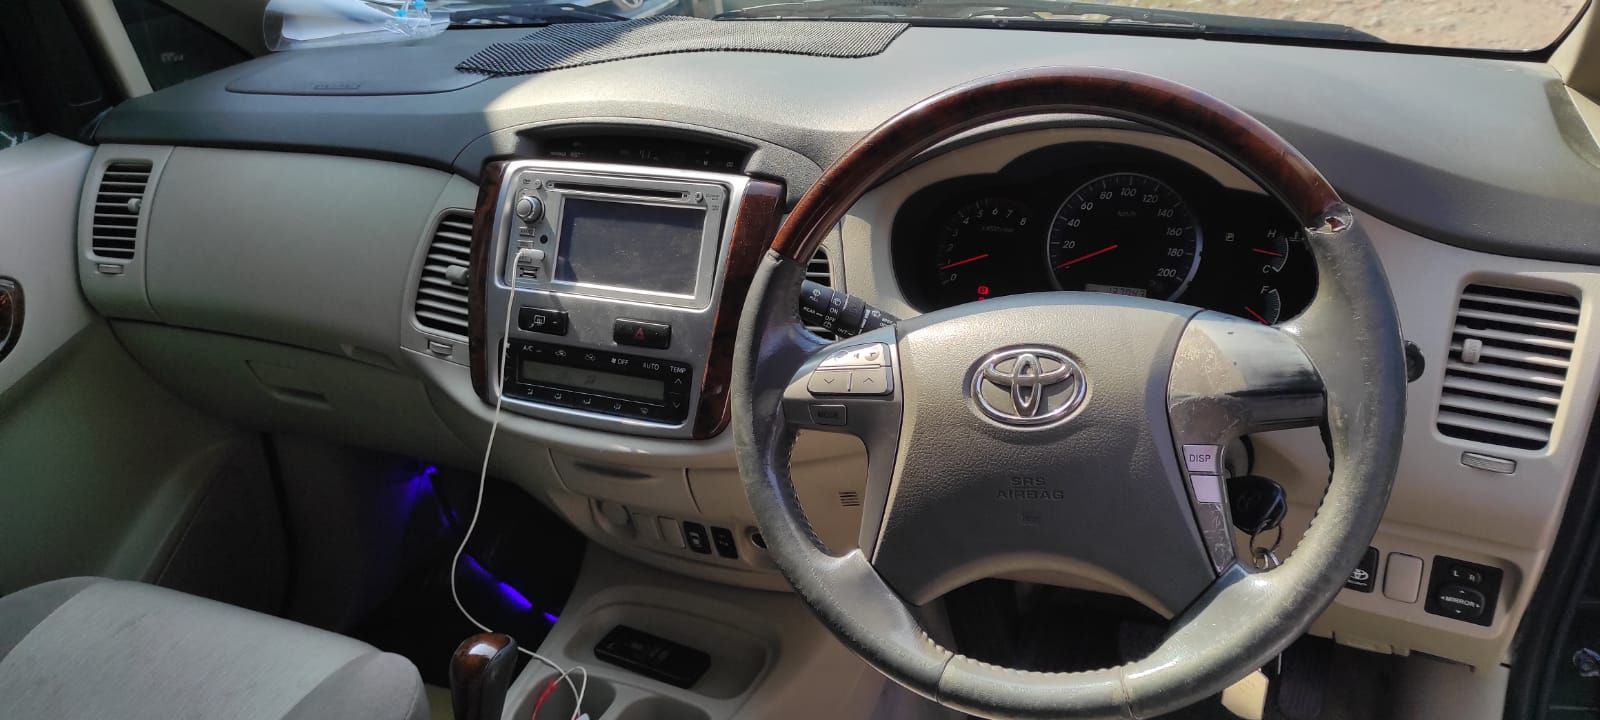 Dijual 2012 Toyota Kijang Innova 2.0 V AT 2.0 V AT Bekas